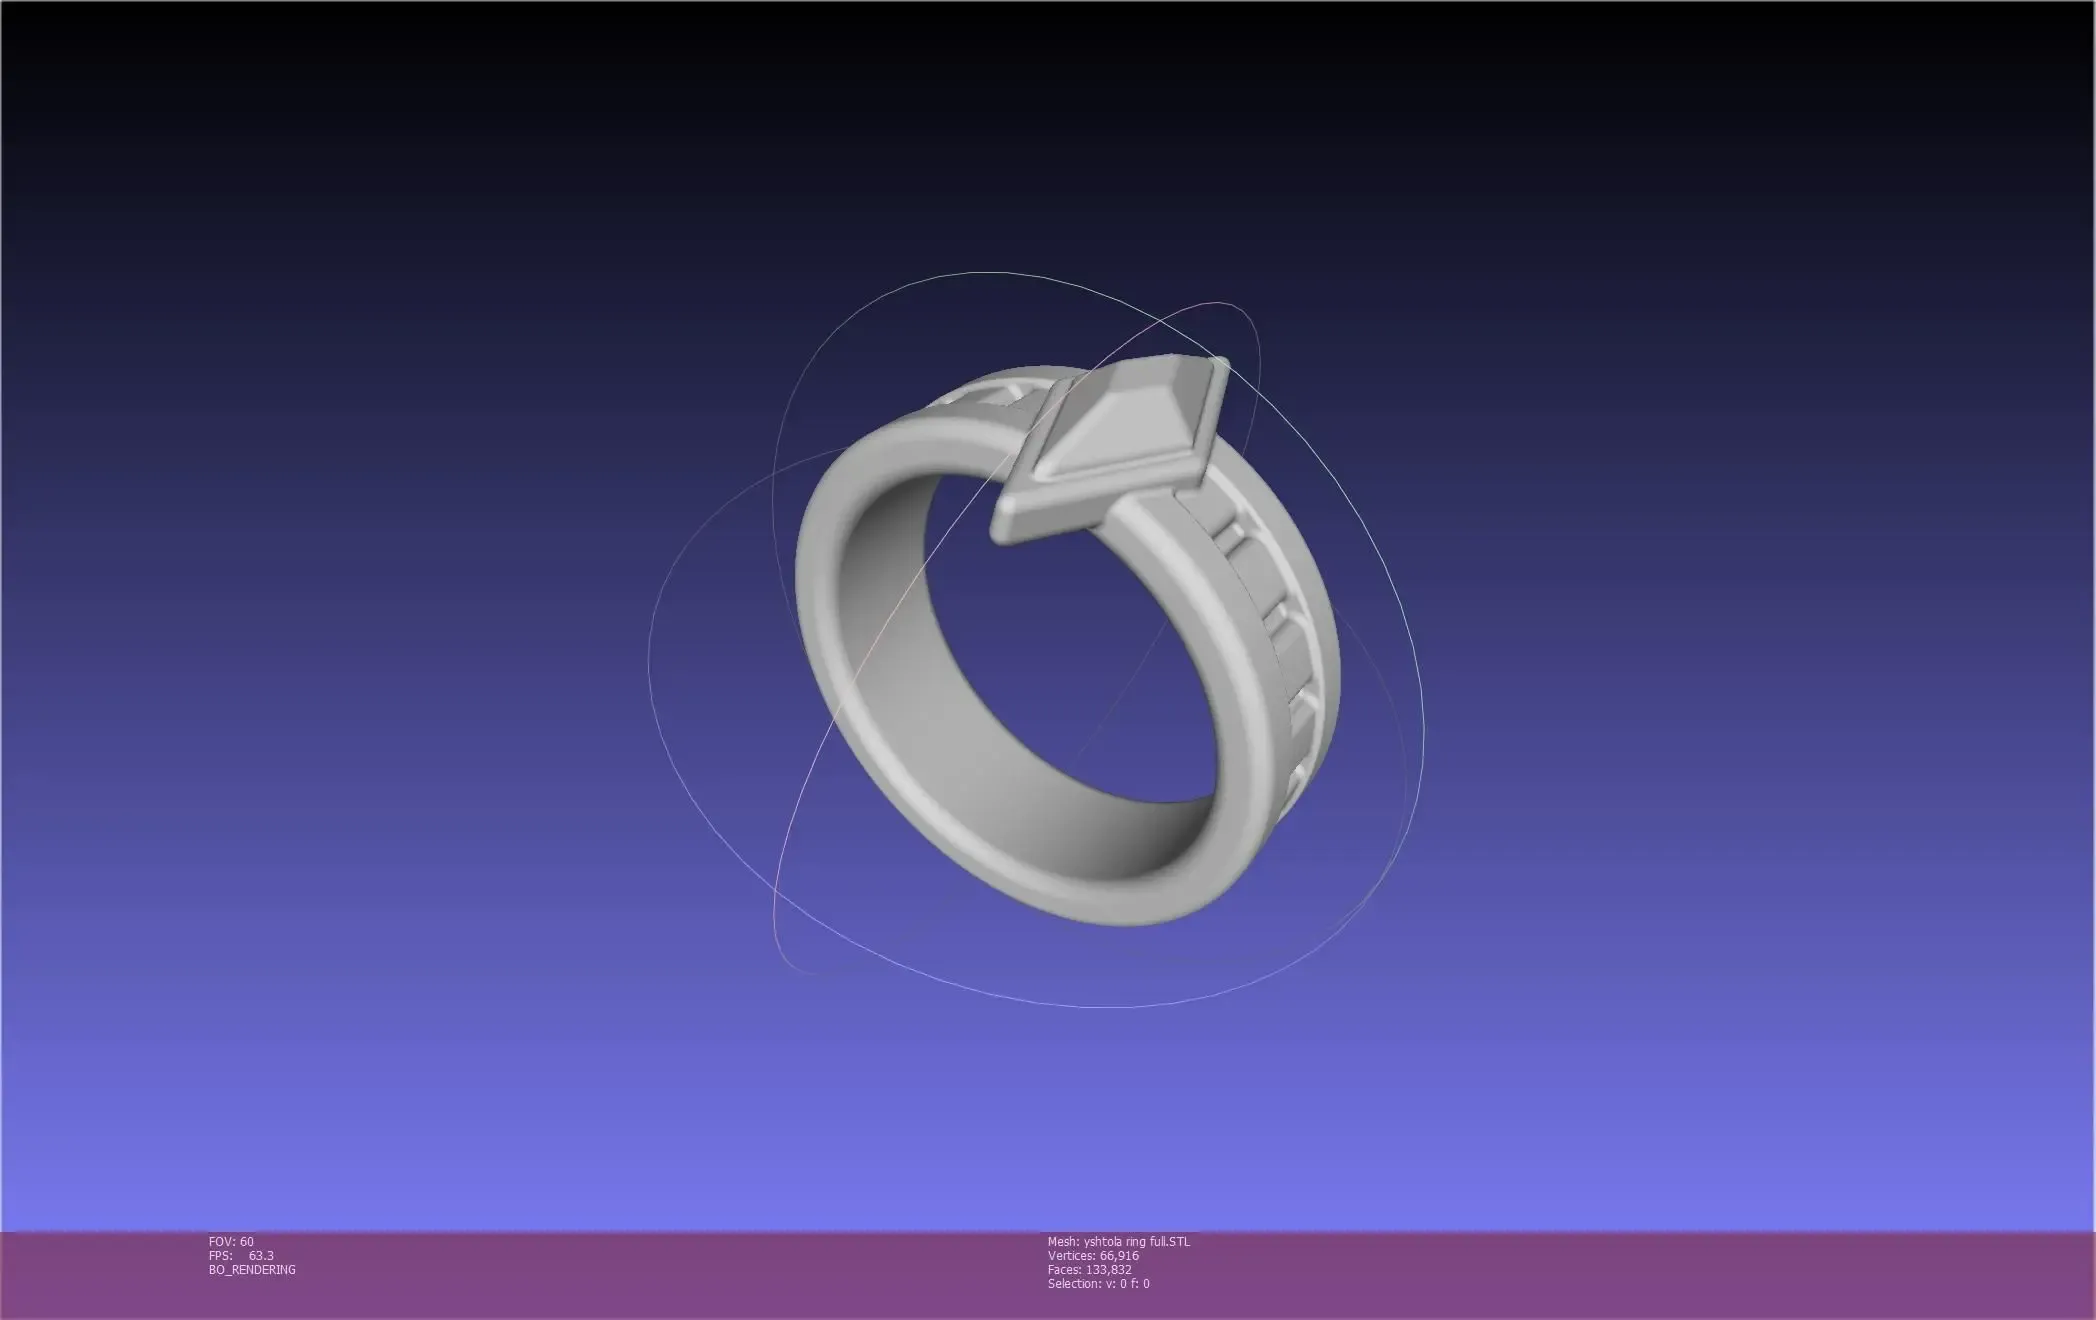 Final Fantasy XIV Yshtola Ring Printable Model